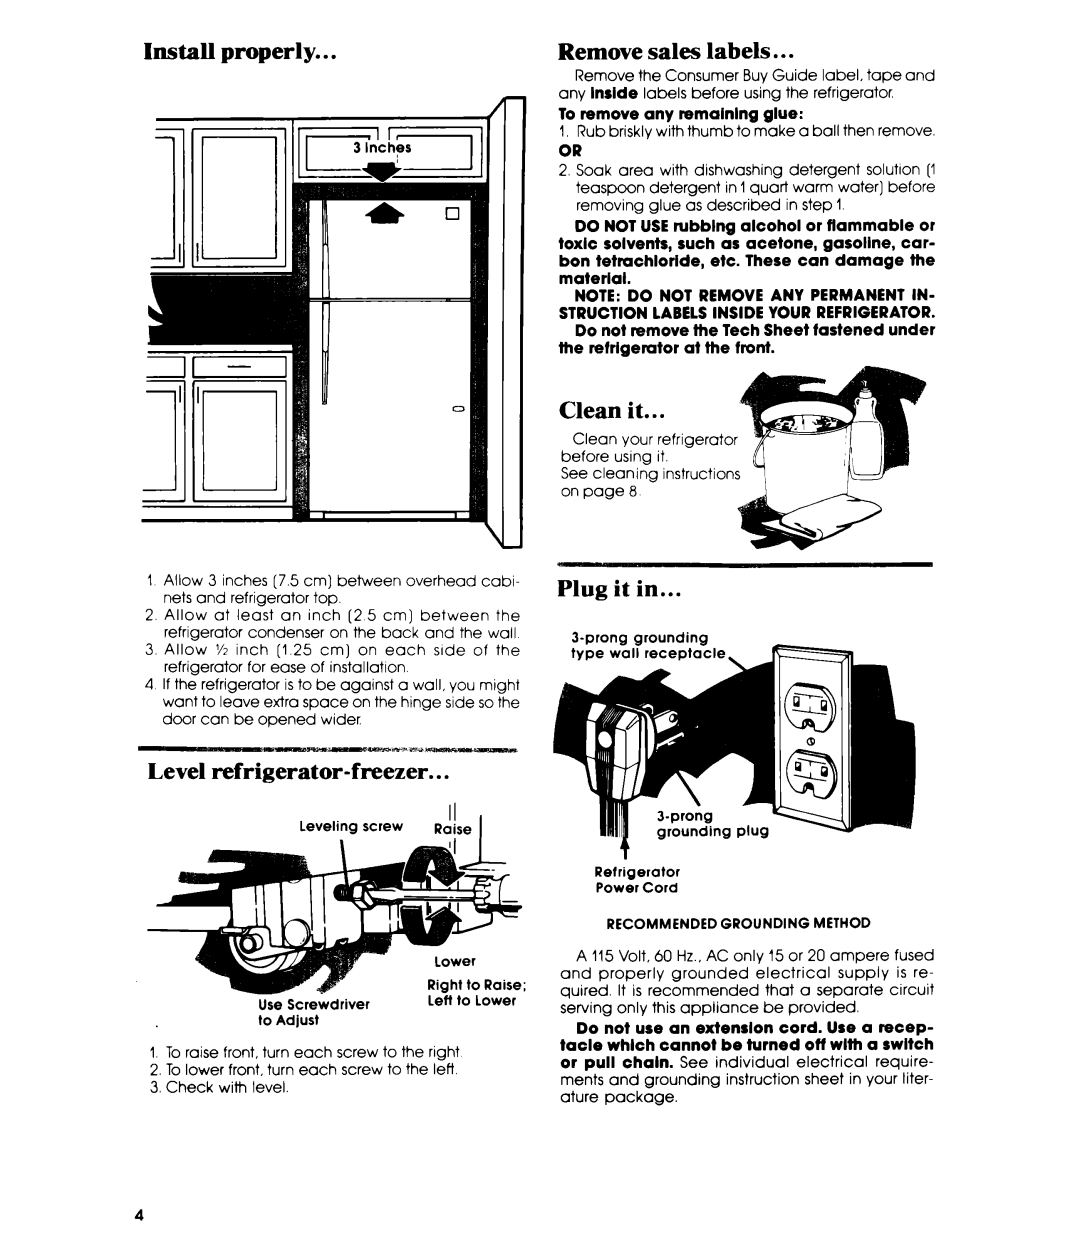 Whirlpool ETl8EK manual Install properly, Level refrigerator-freezer, Remove sales labels, Clean it, Plug it in 